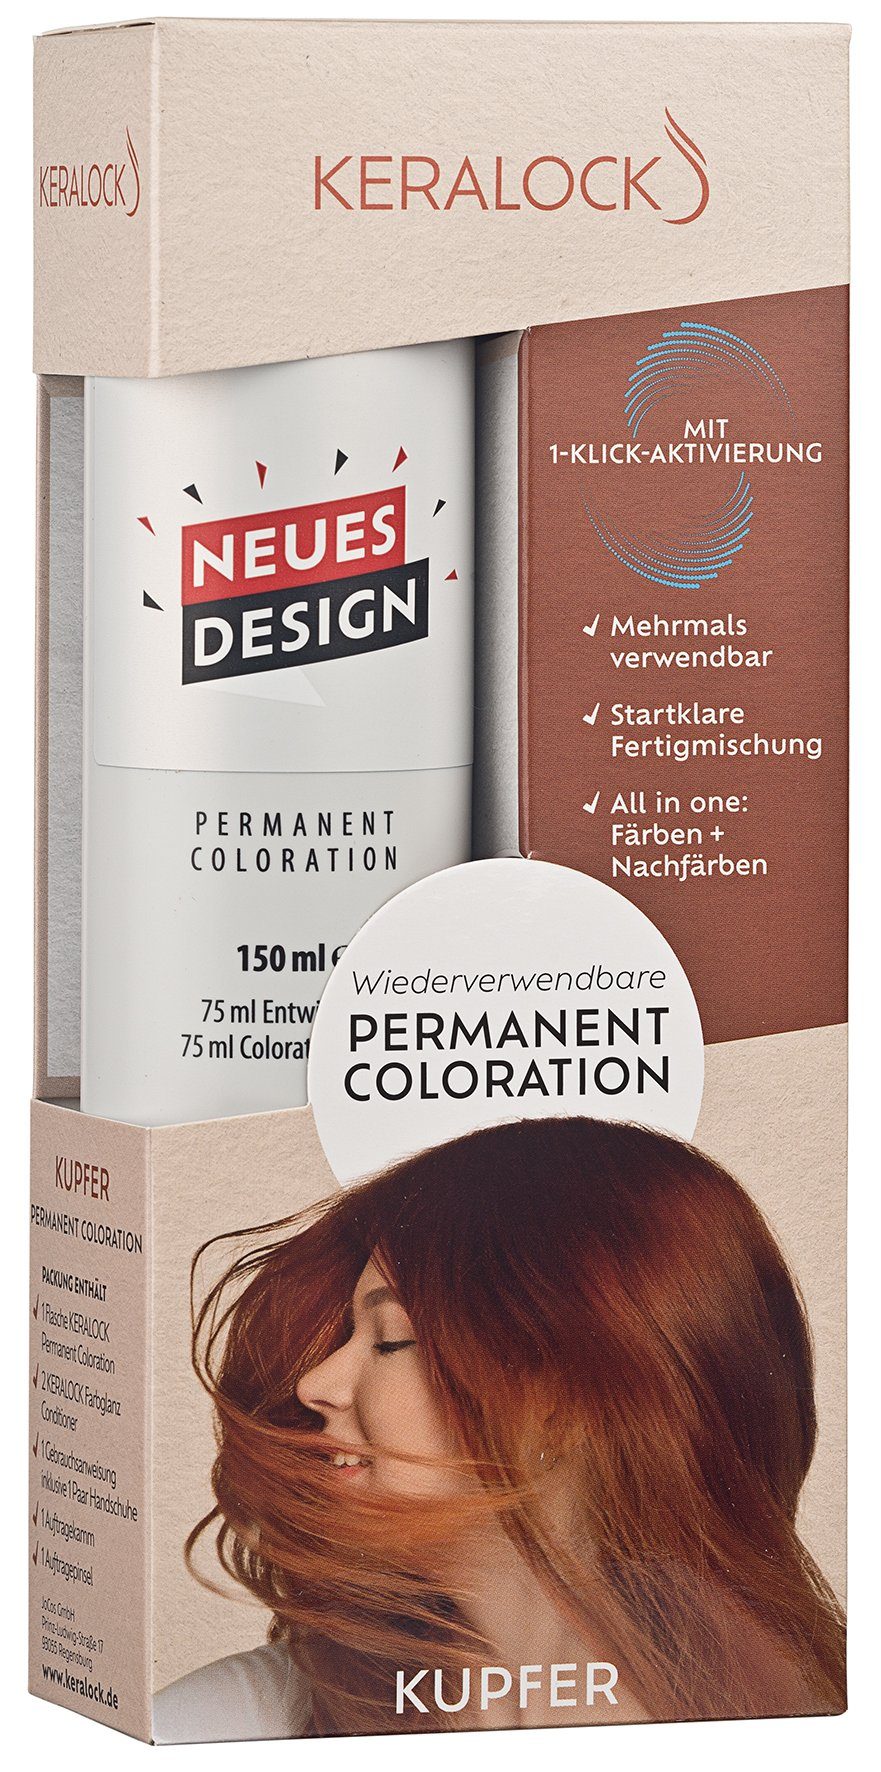 Keralock Coloration Wiederverwendbare Haarfarbe Kupfer | Haarfarben